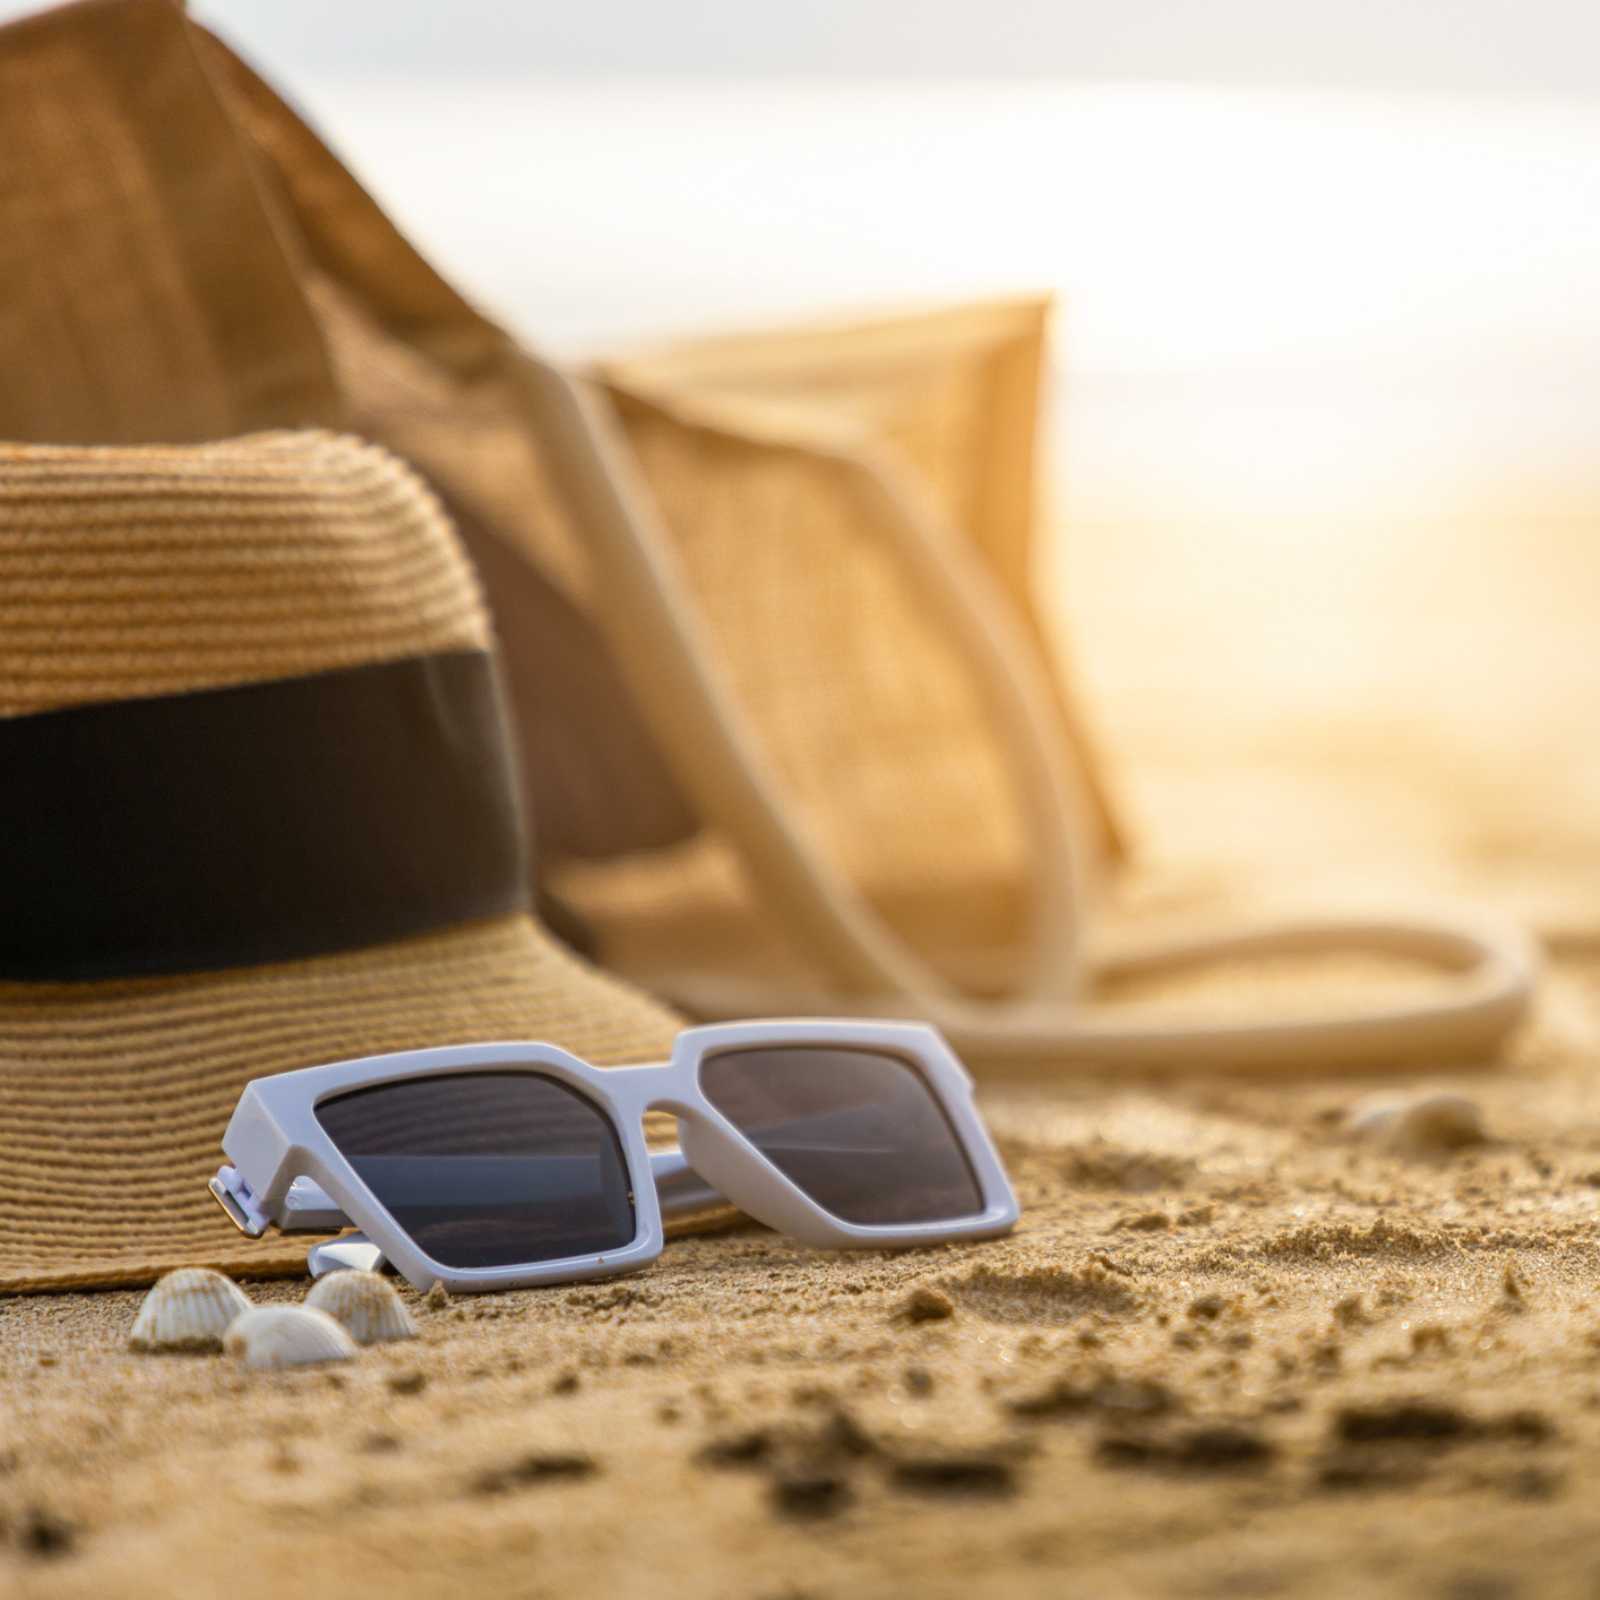 sunglasses on a pile of sand on beach